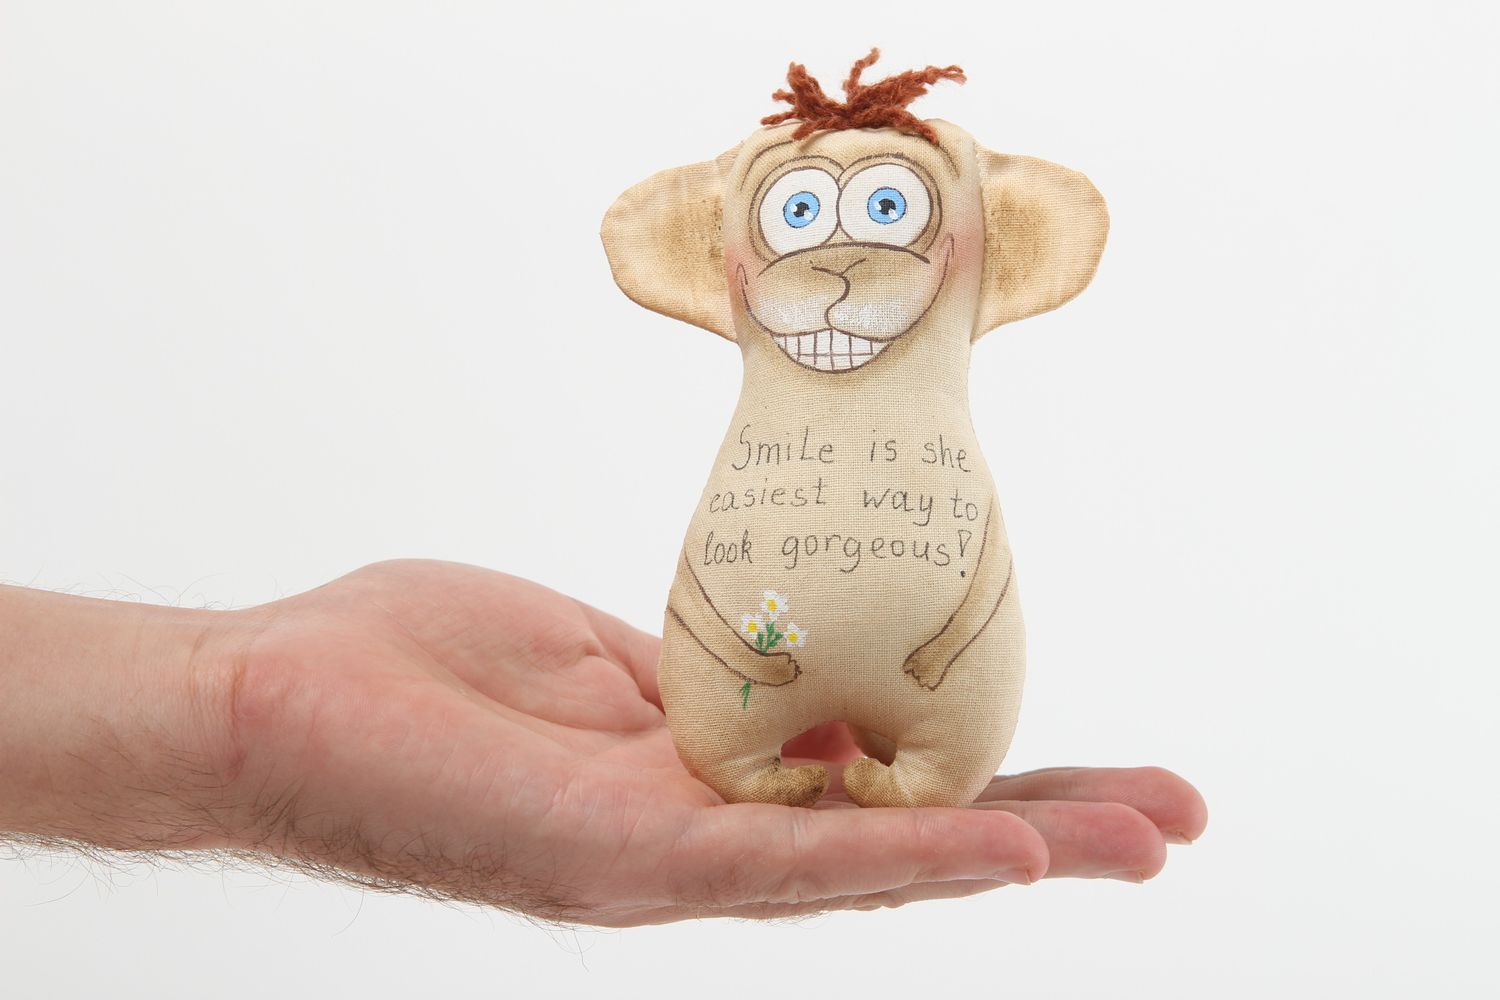 Handmade toy unusual animal toys for children nursery decor gift ideas photo 5